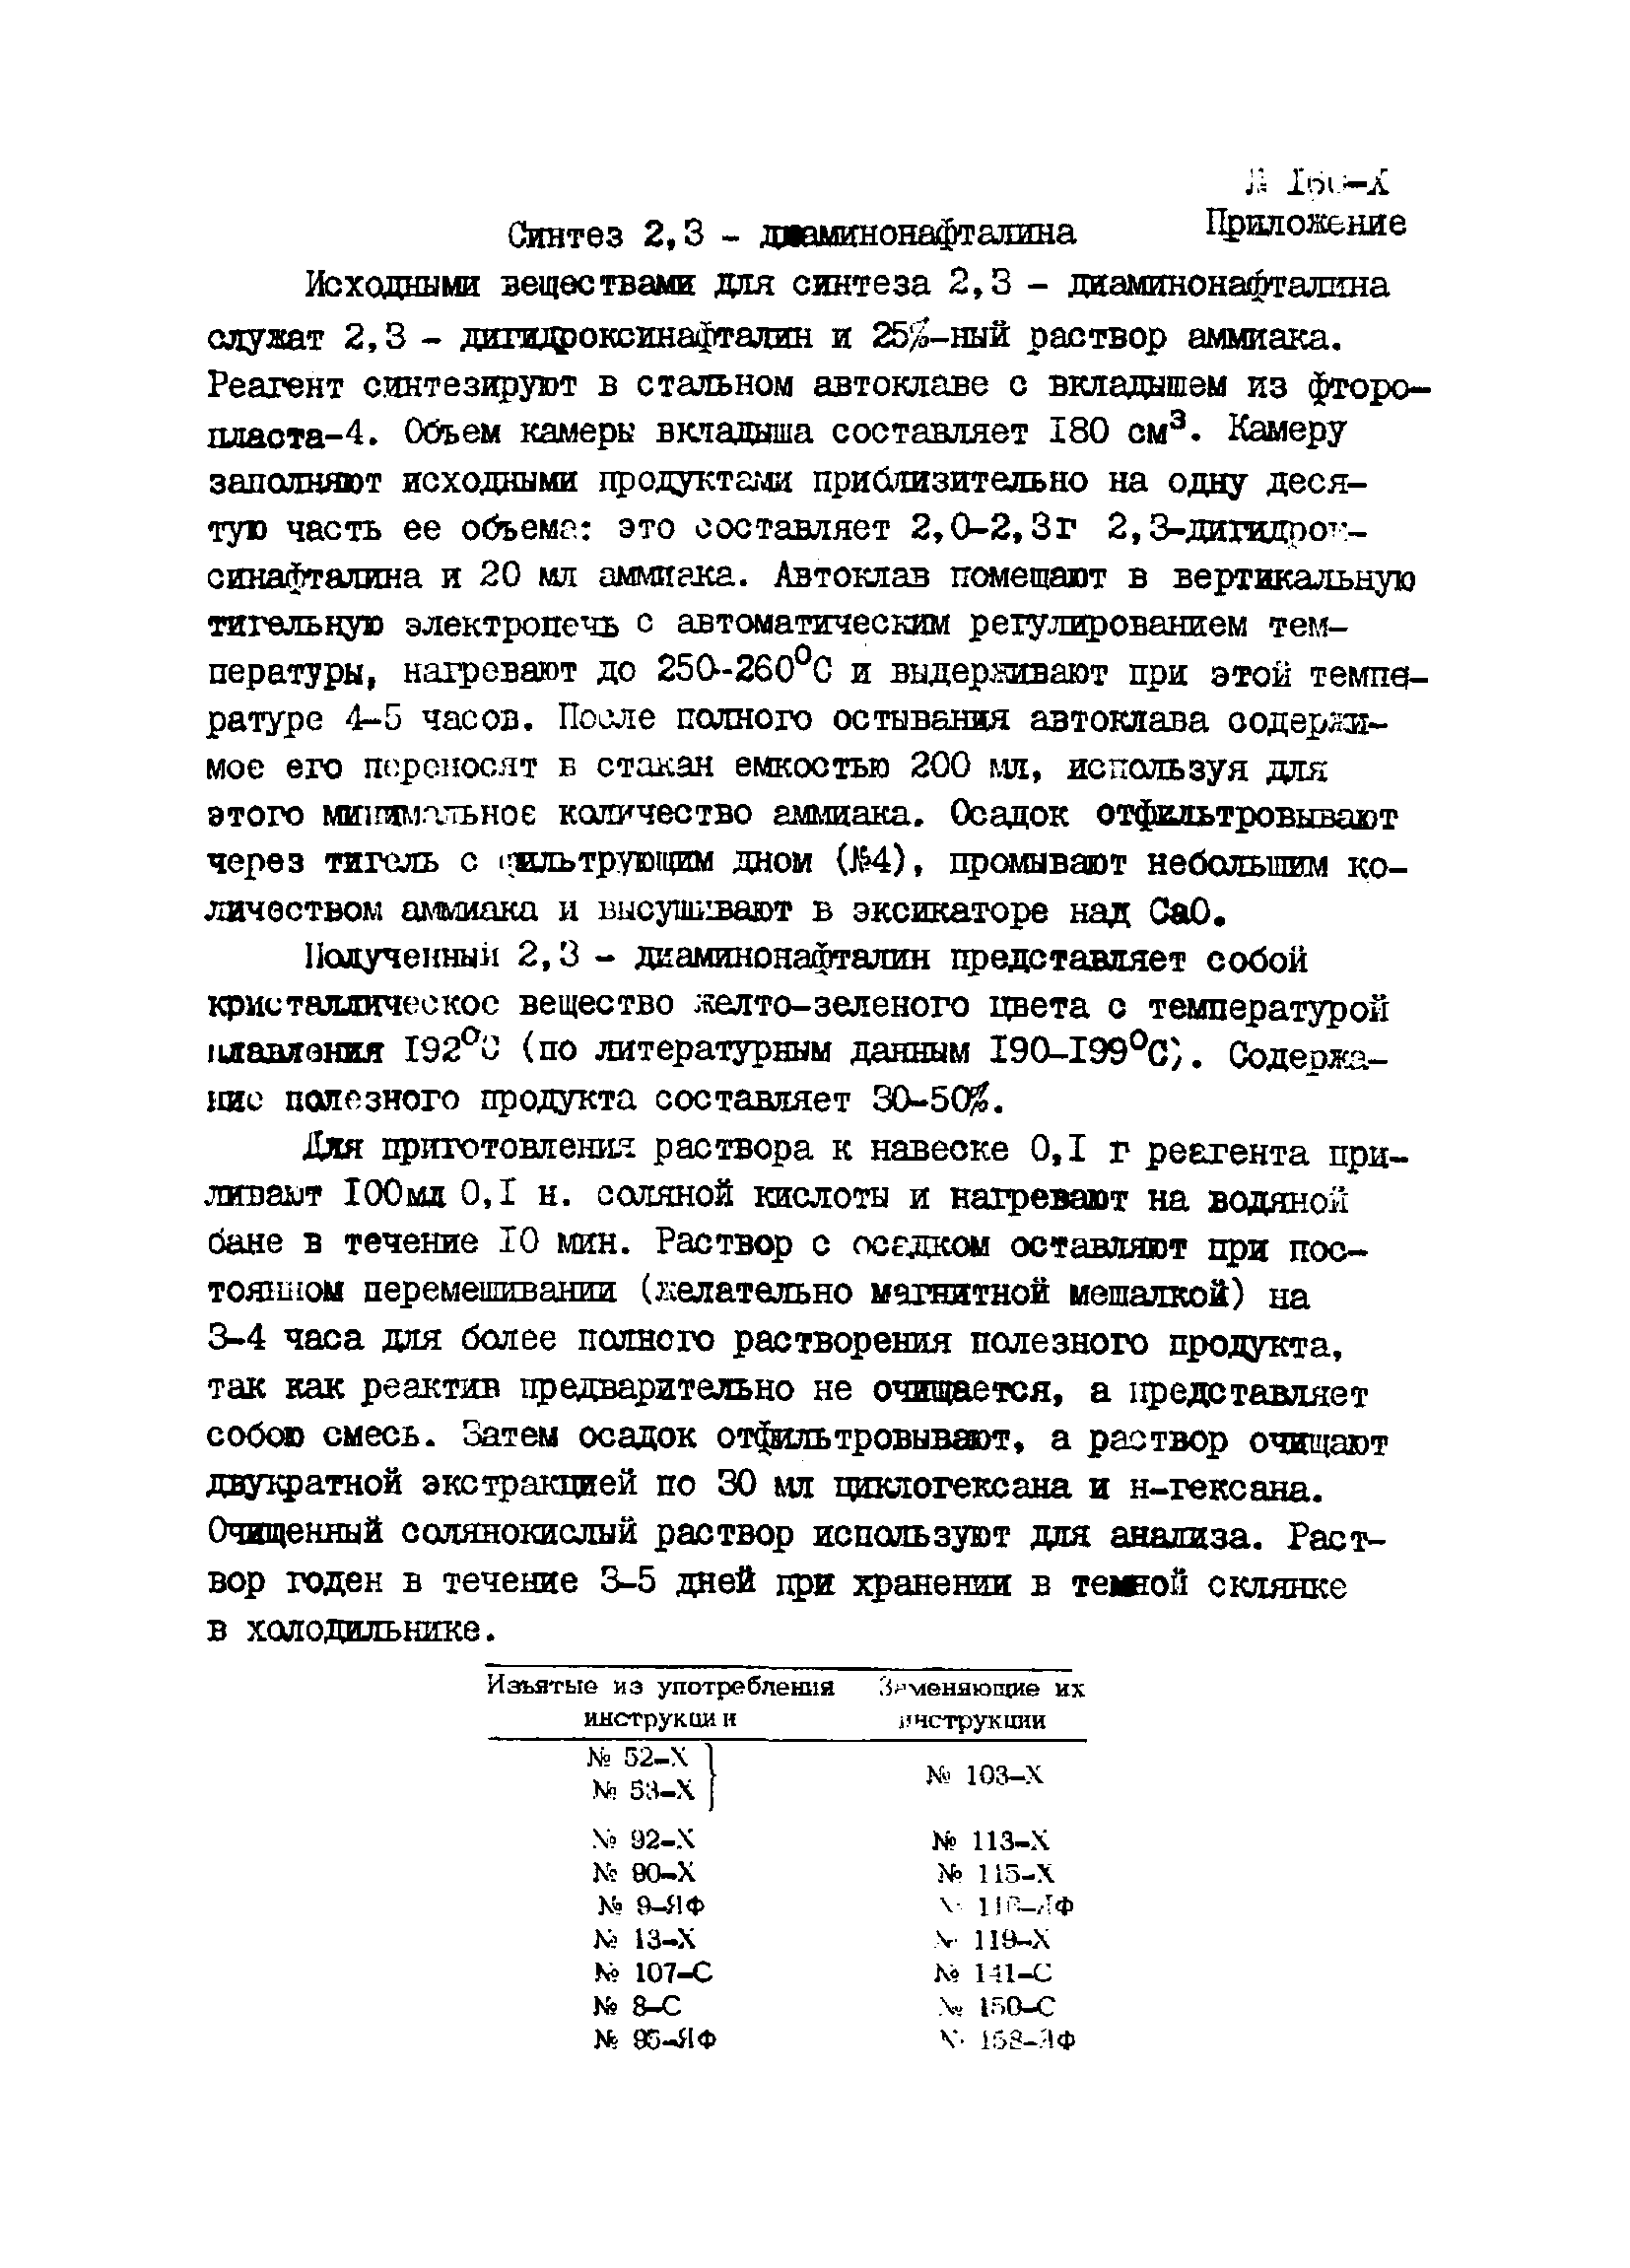 Инструкция НСАМ 160-Х